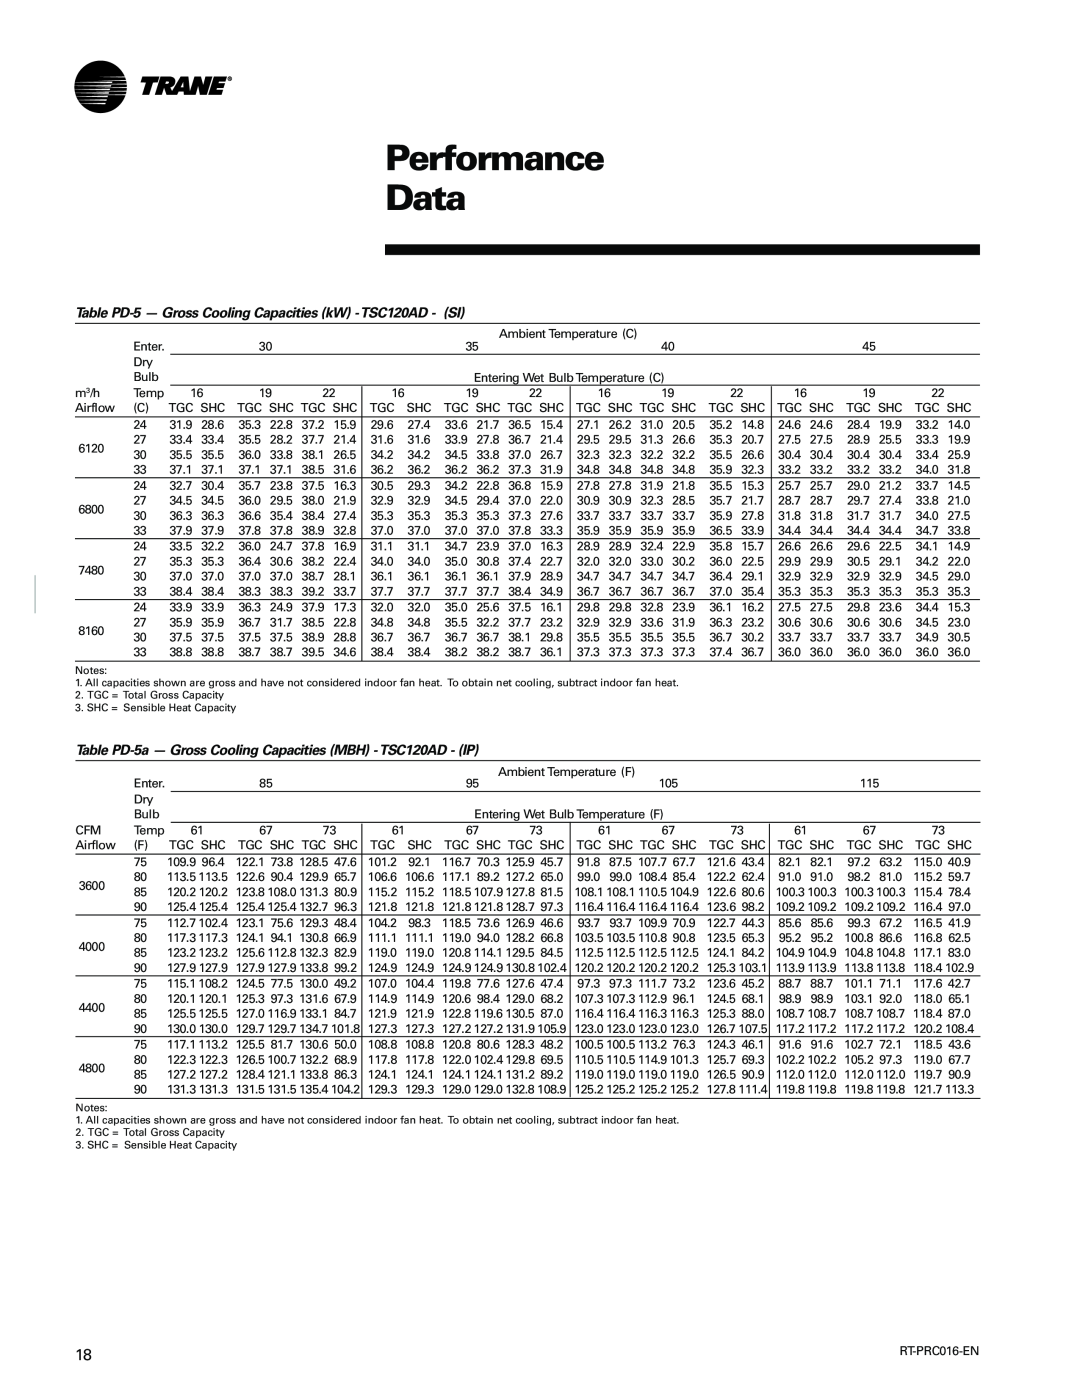 Trane TSC060-120 manual Performance Data, Ambient Temperature C 